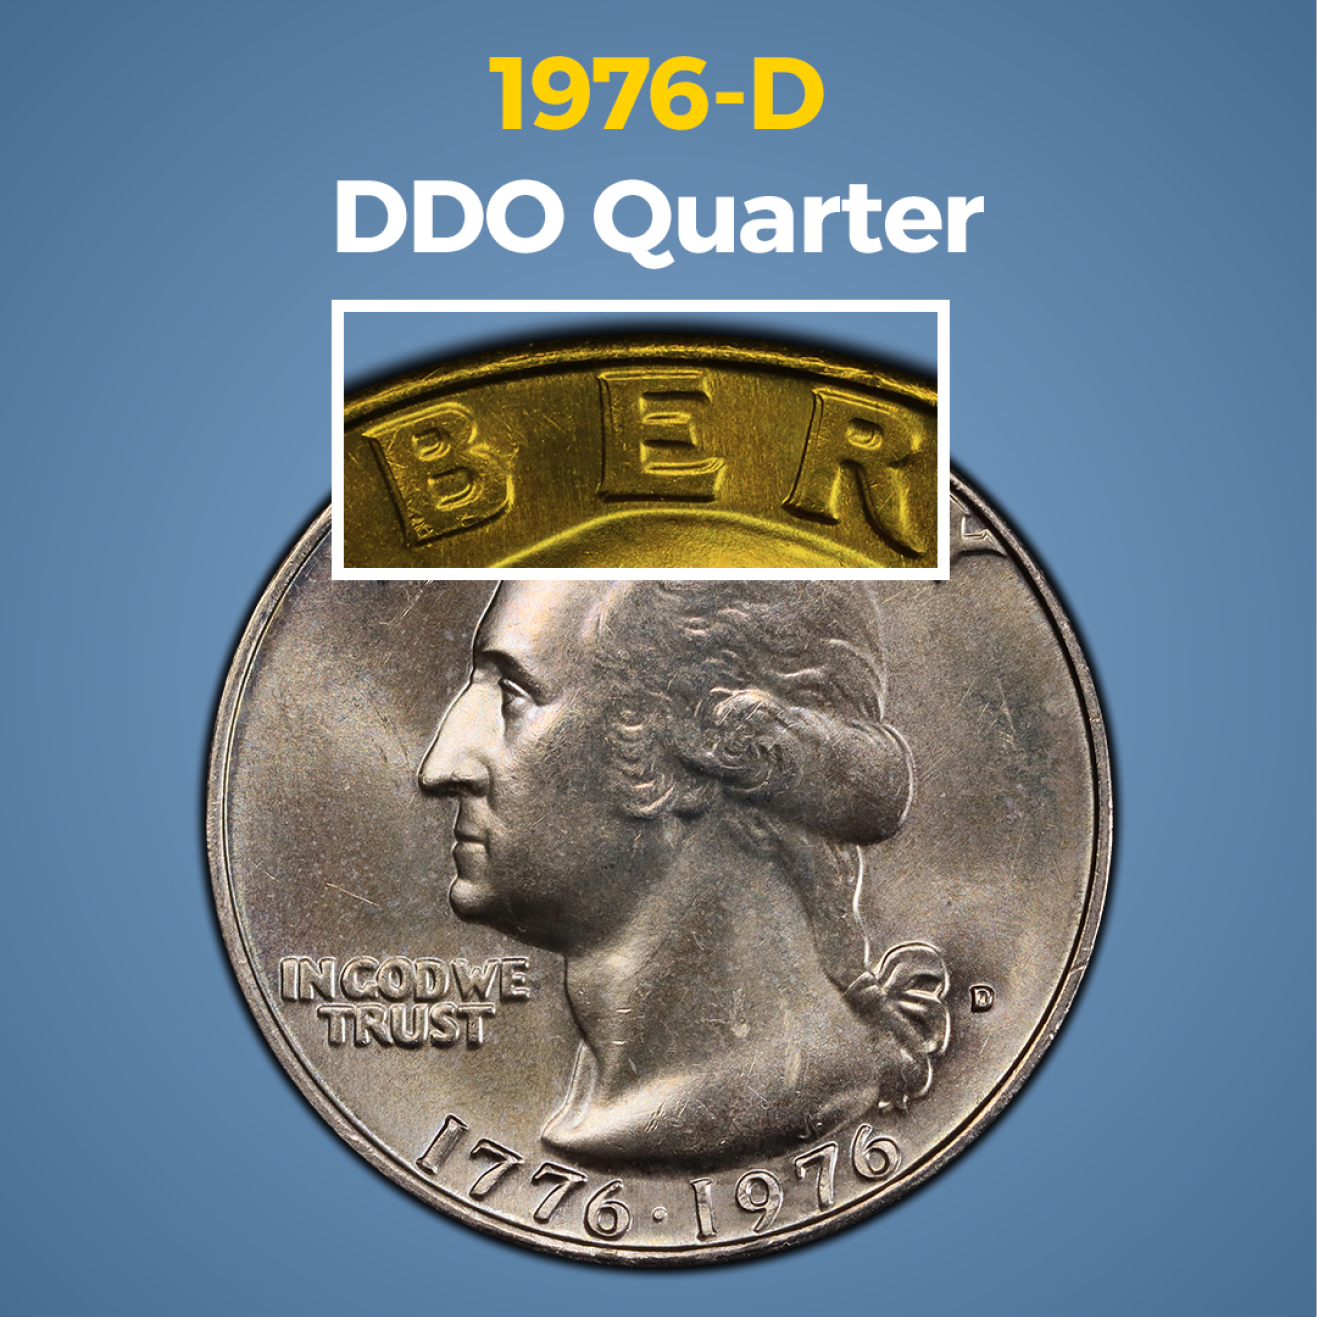 Latest Image: Variety 1976-D DDO Quarters